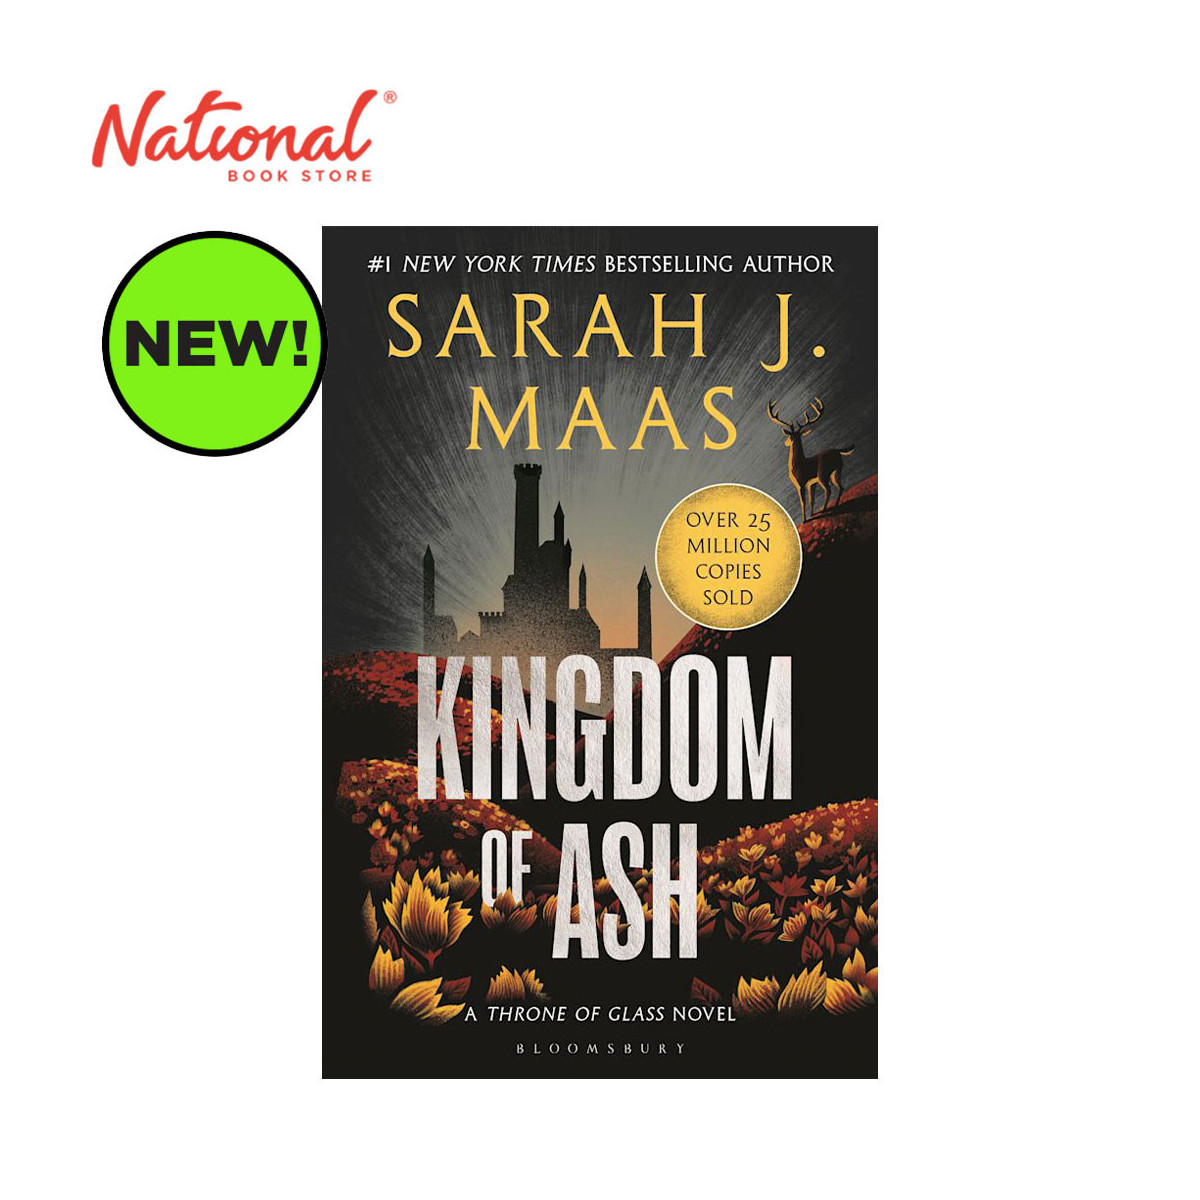 Throne of Glass 7: Kingdom Of Ash by Sarah J. Maas - Trade Paperback - Sci-Fi - Fantasy - Horror